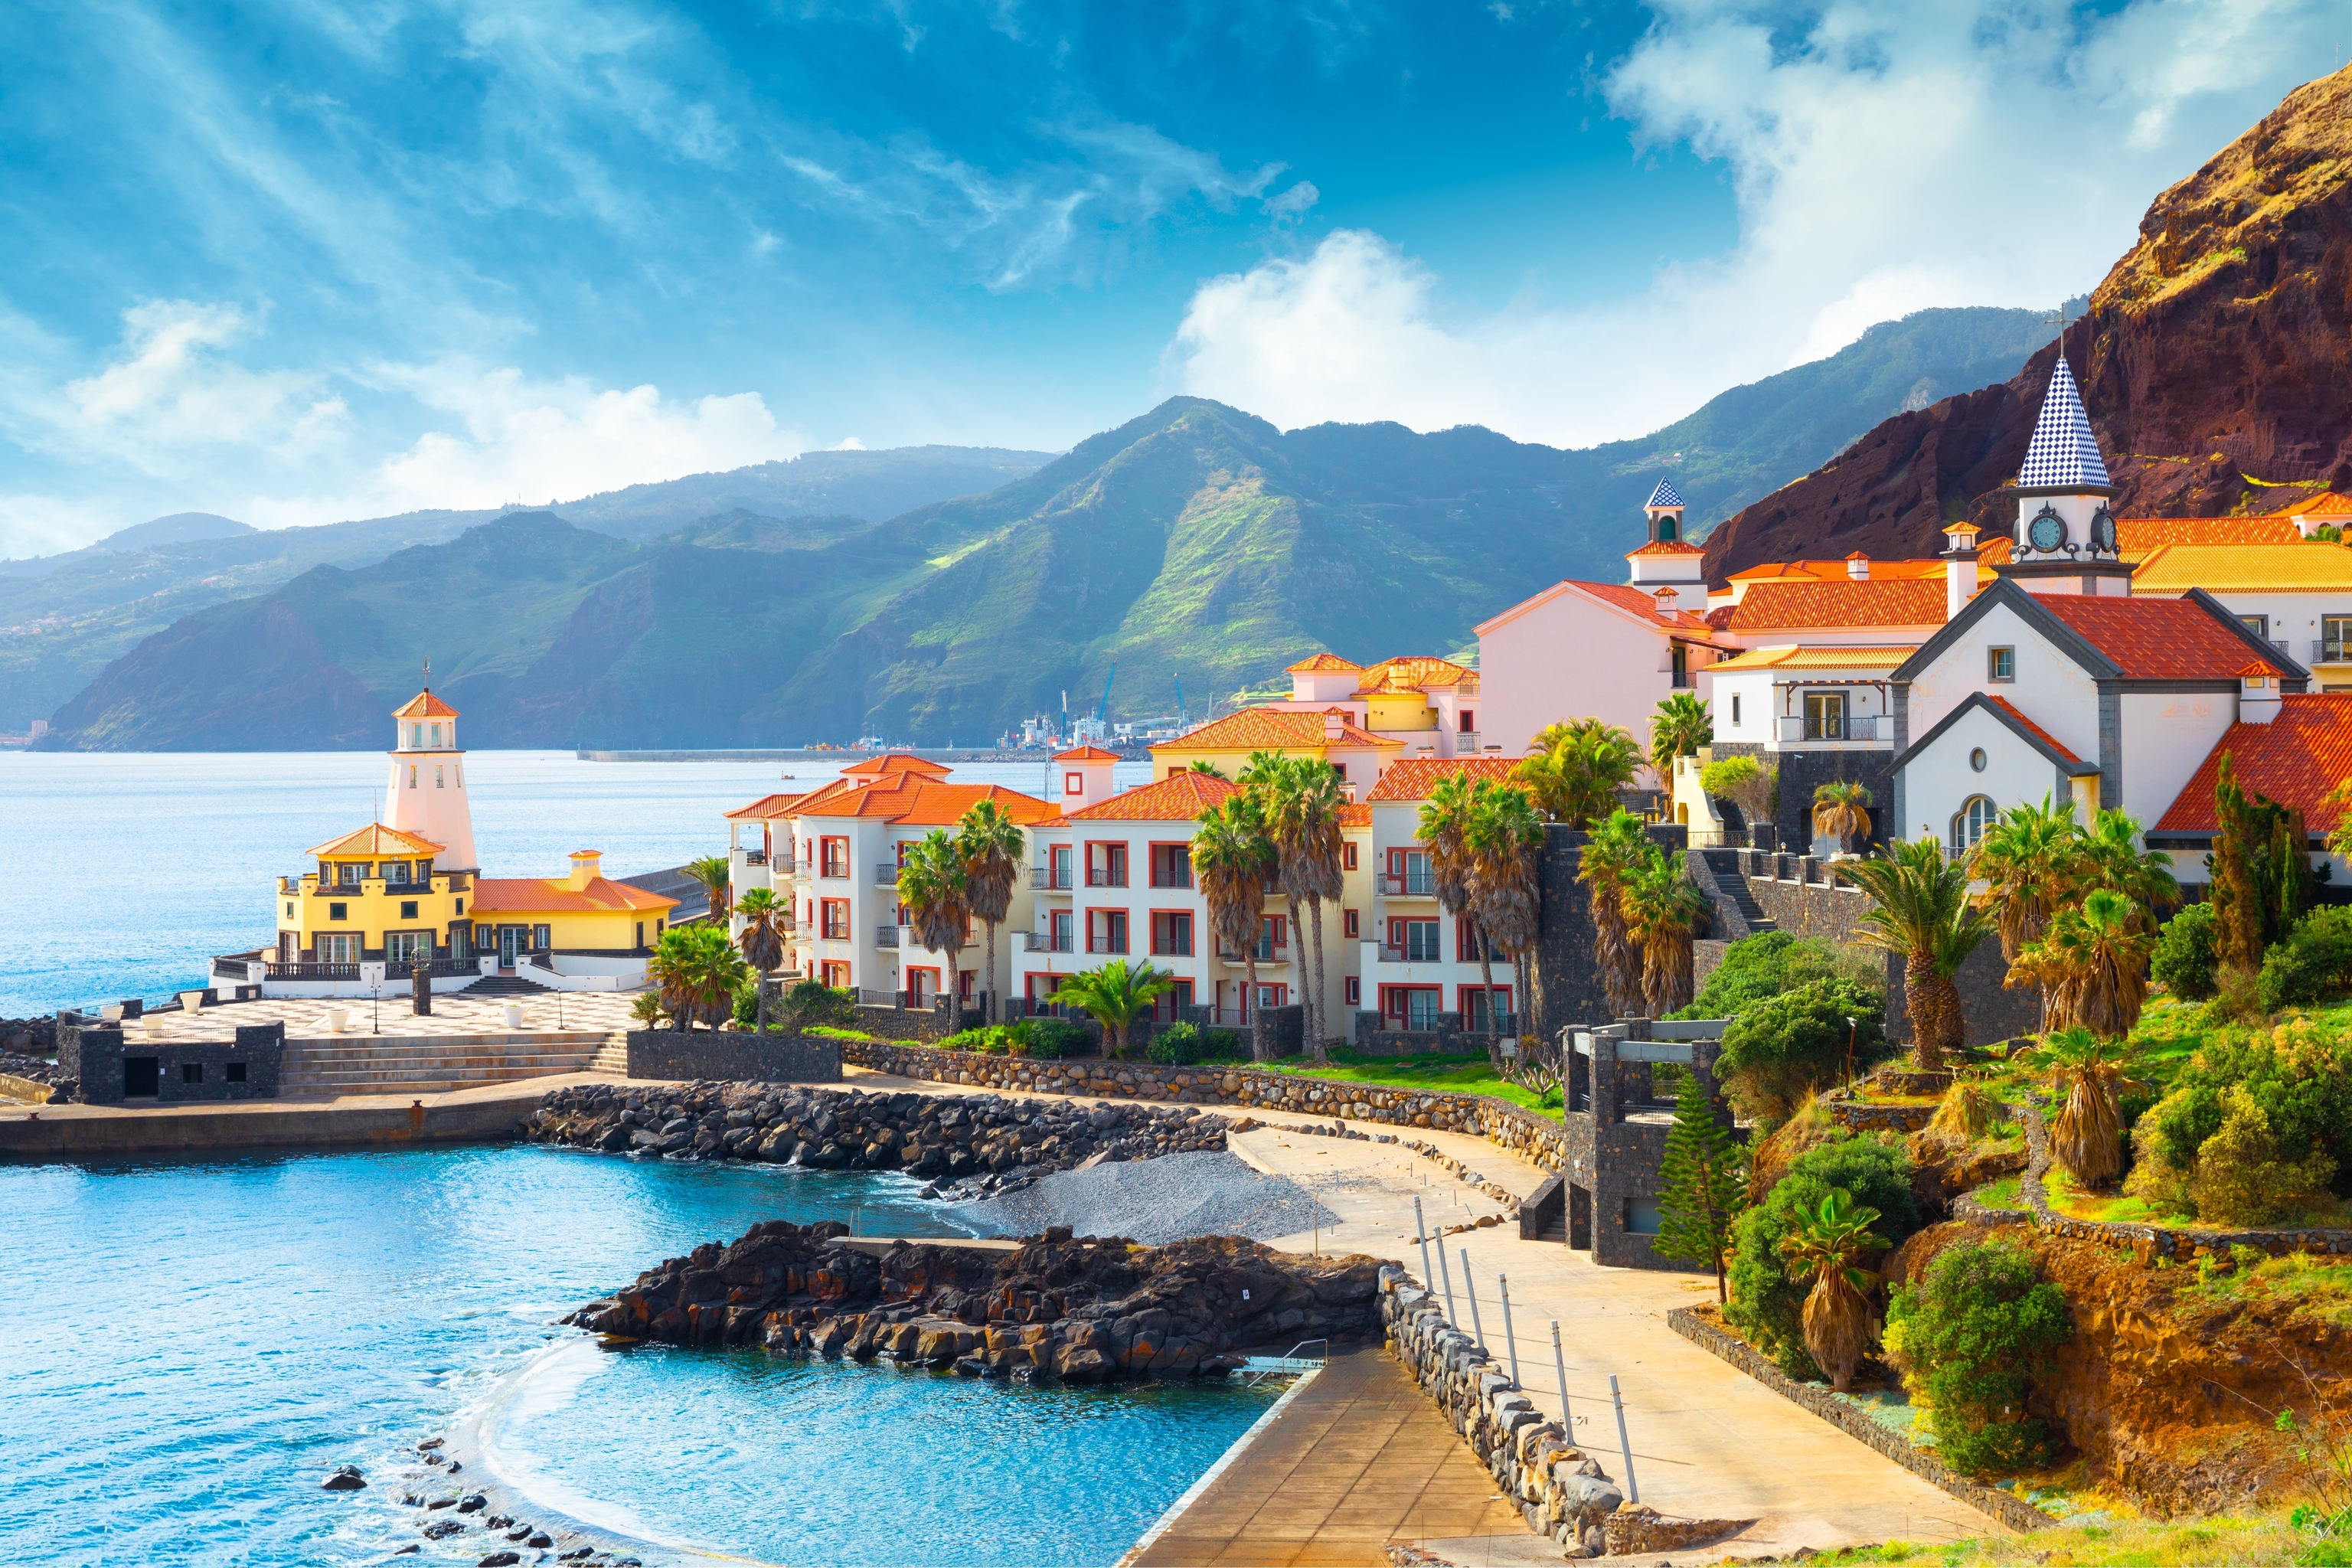 Colorido paisaje de la isla de Madeira.